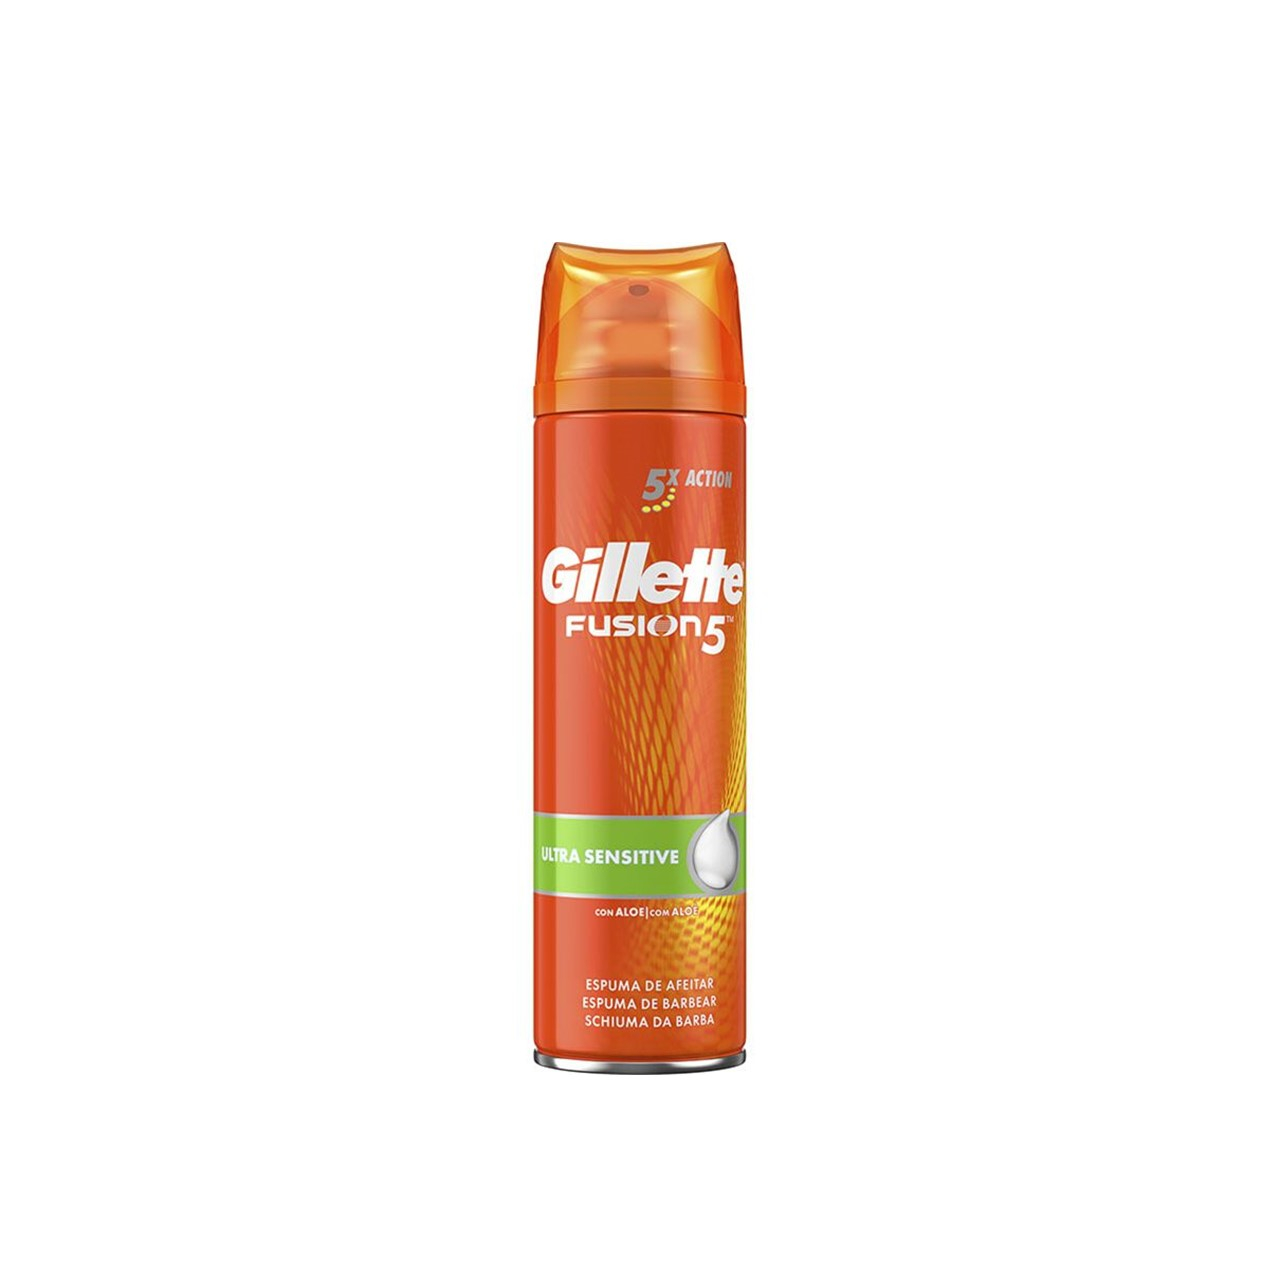 Gillette Fusion5 Ultra Sensitive Shaving Foam 250ml (8.45fl oz)